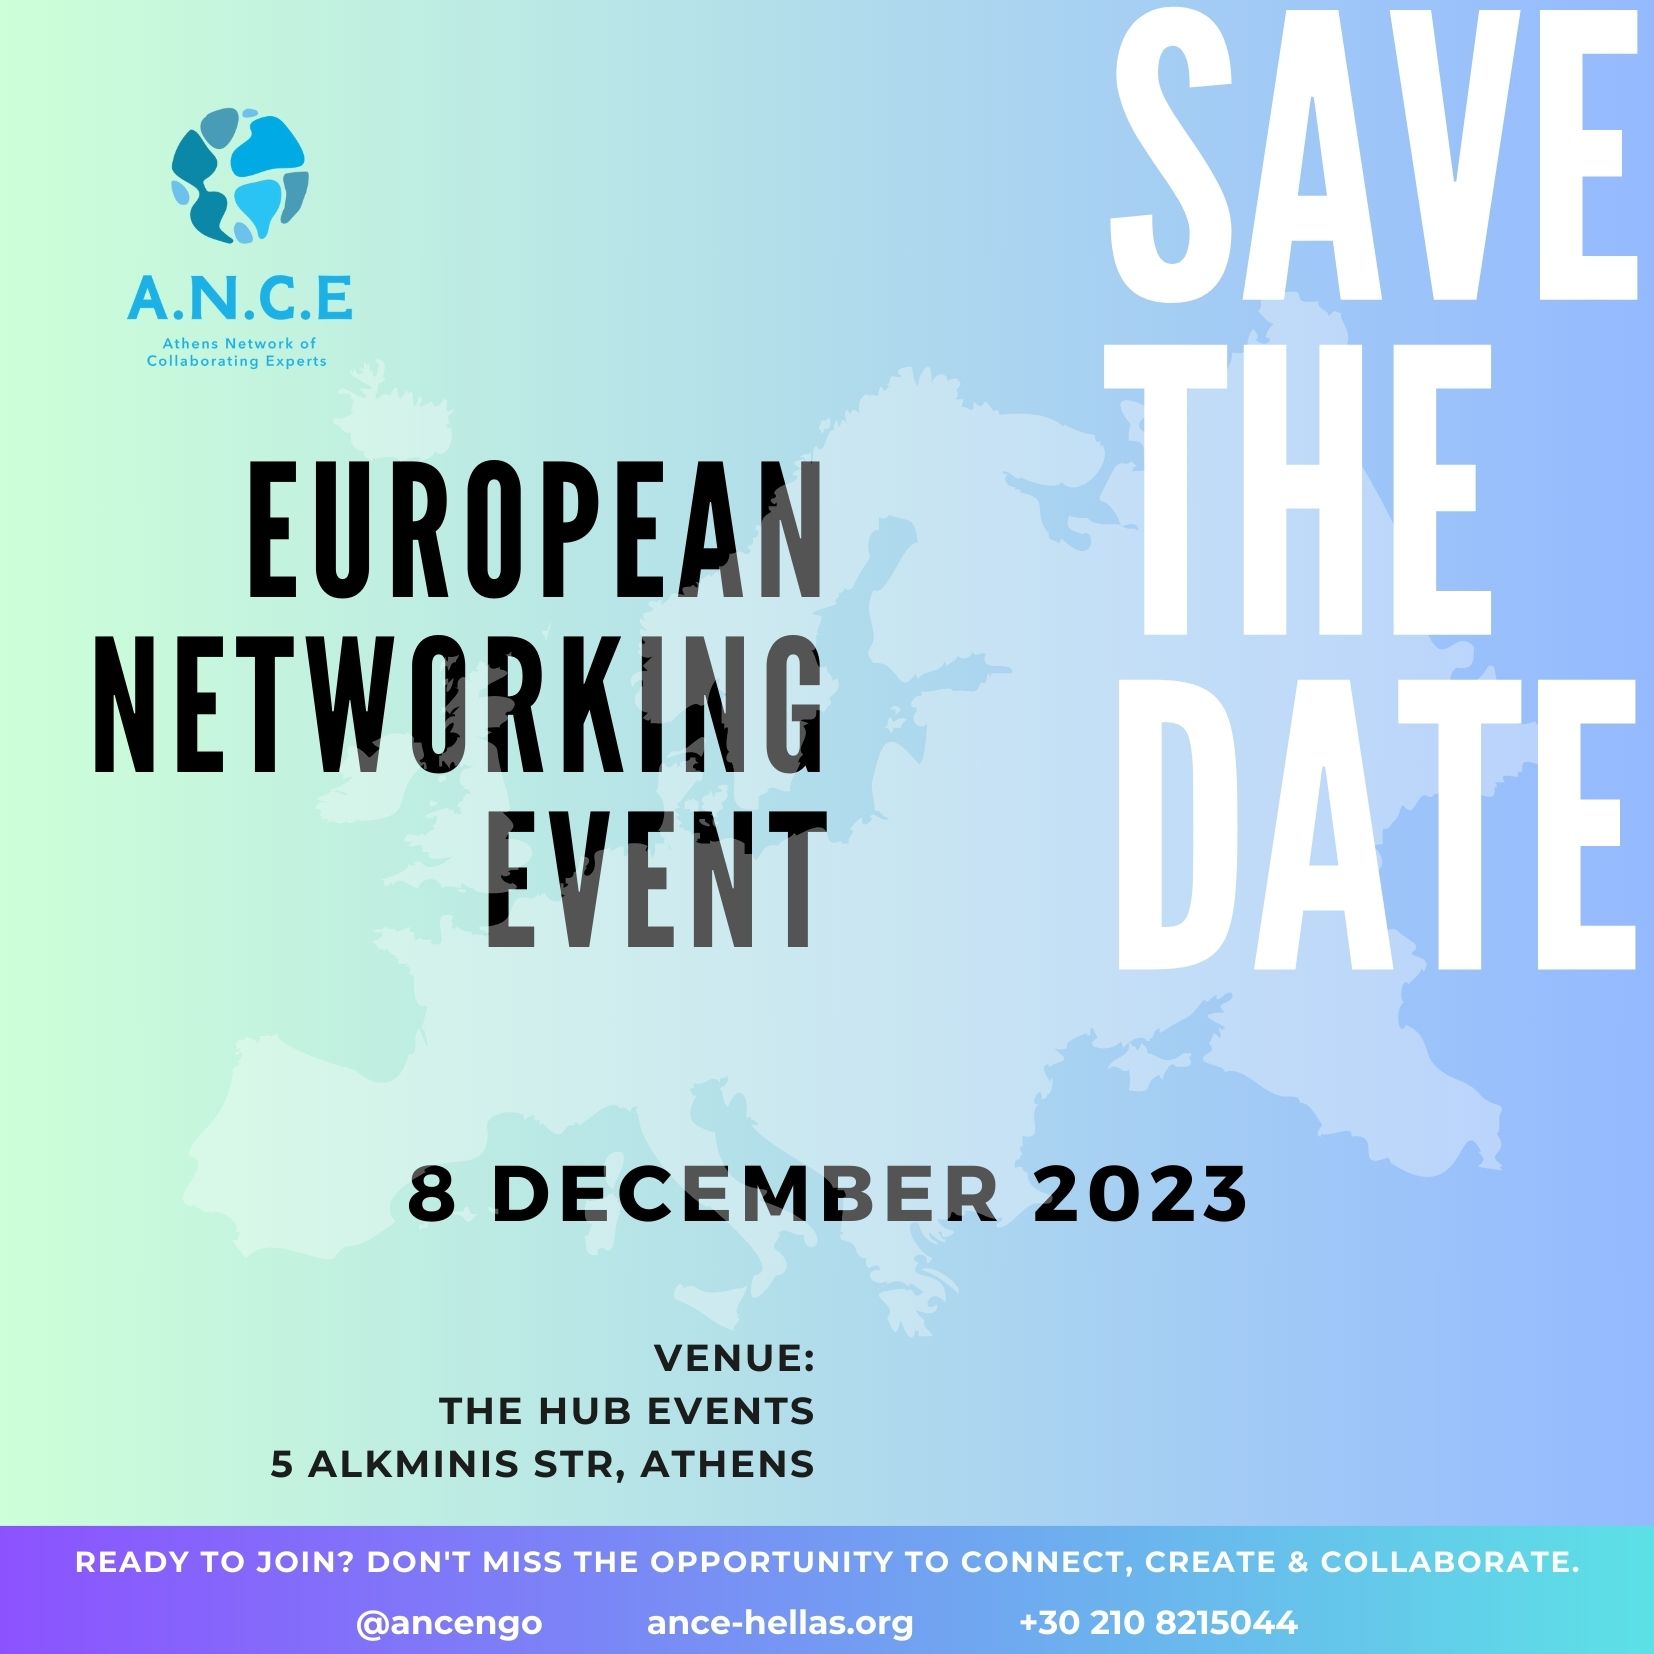 EUROPEAN NETWORKING EVENT